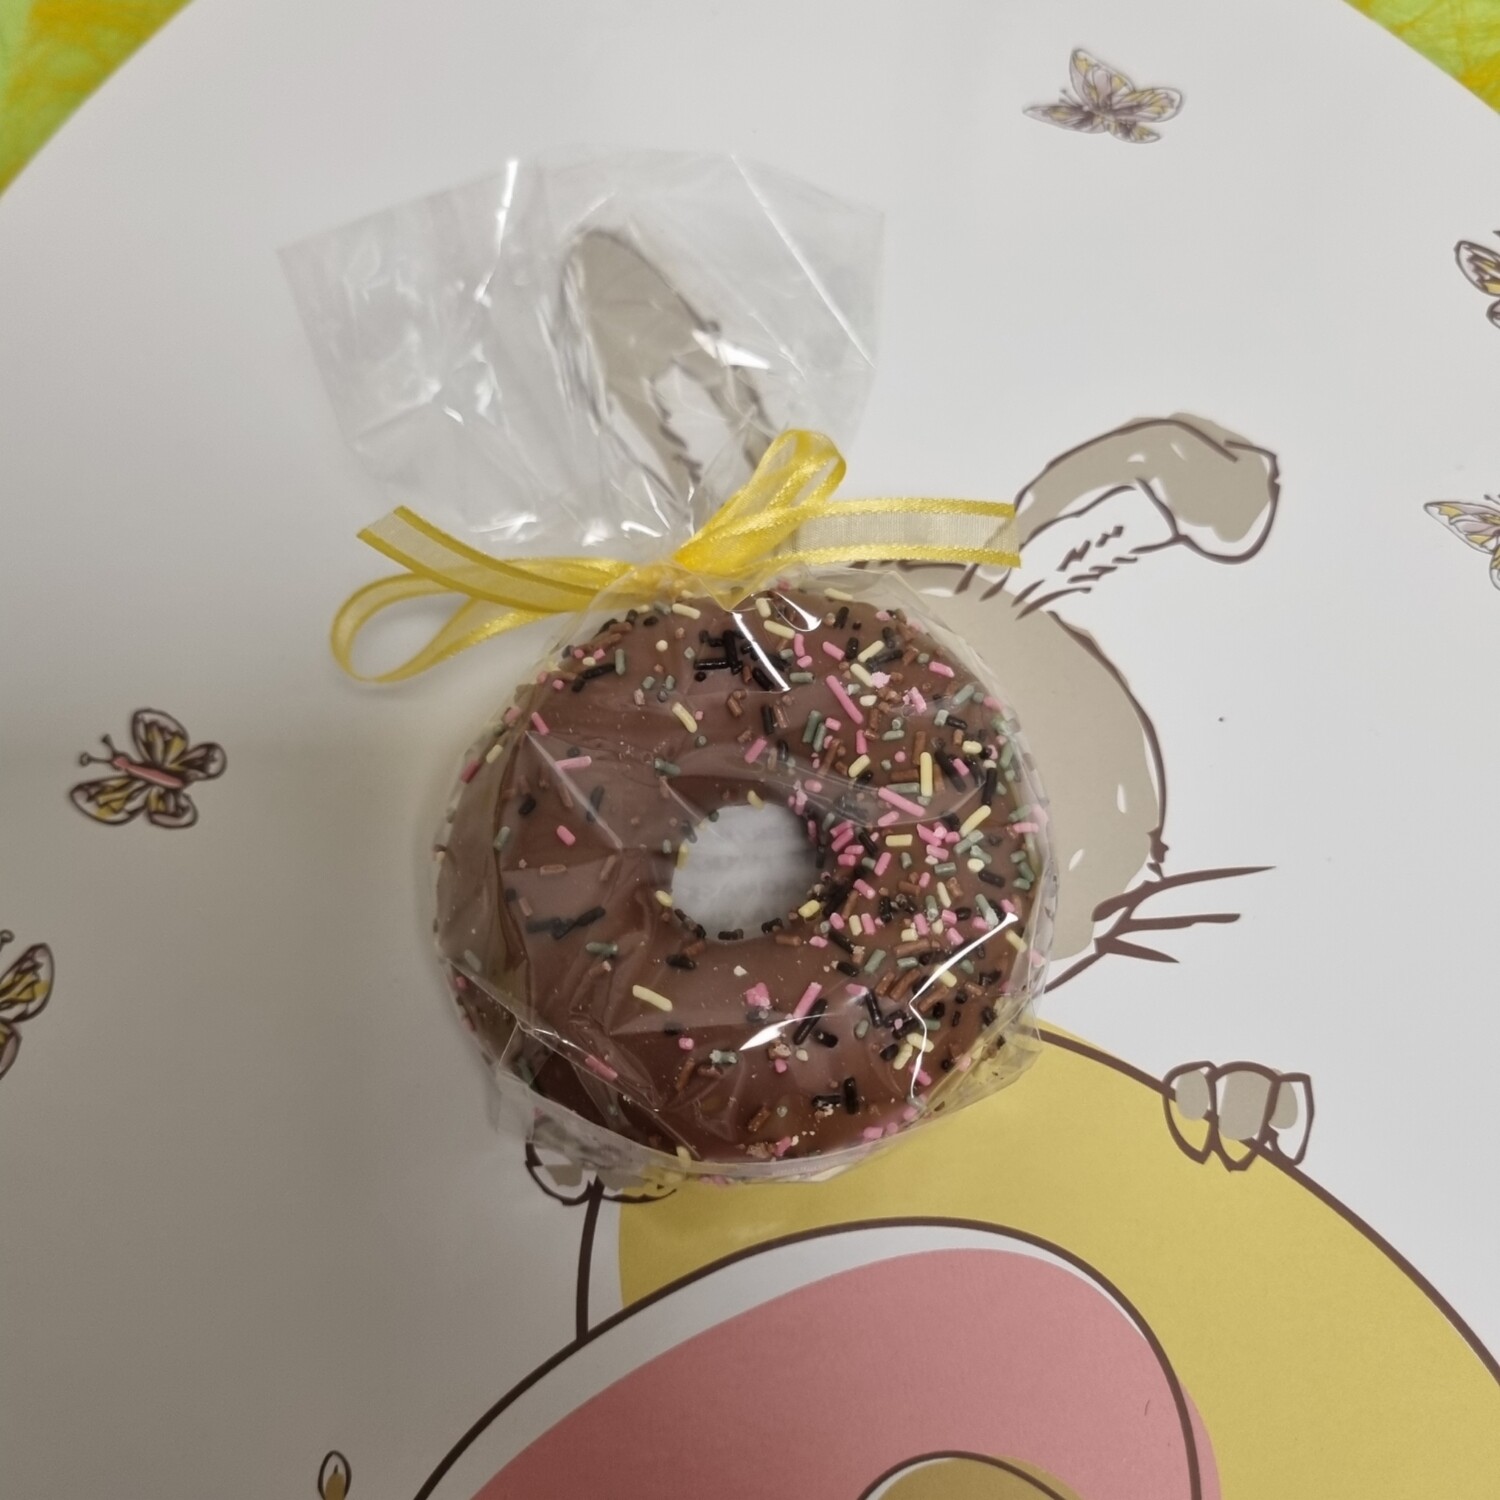 Gevulde donut in chocolade